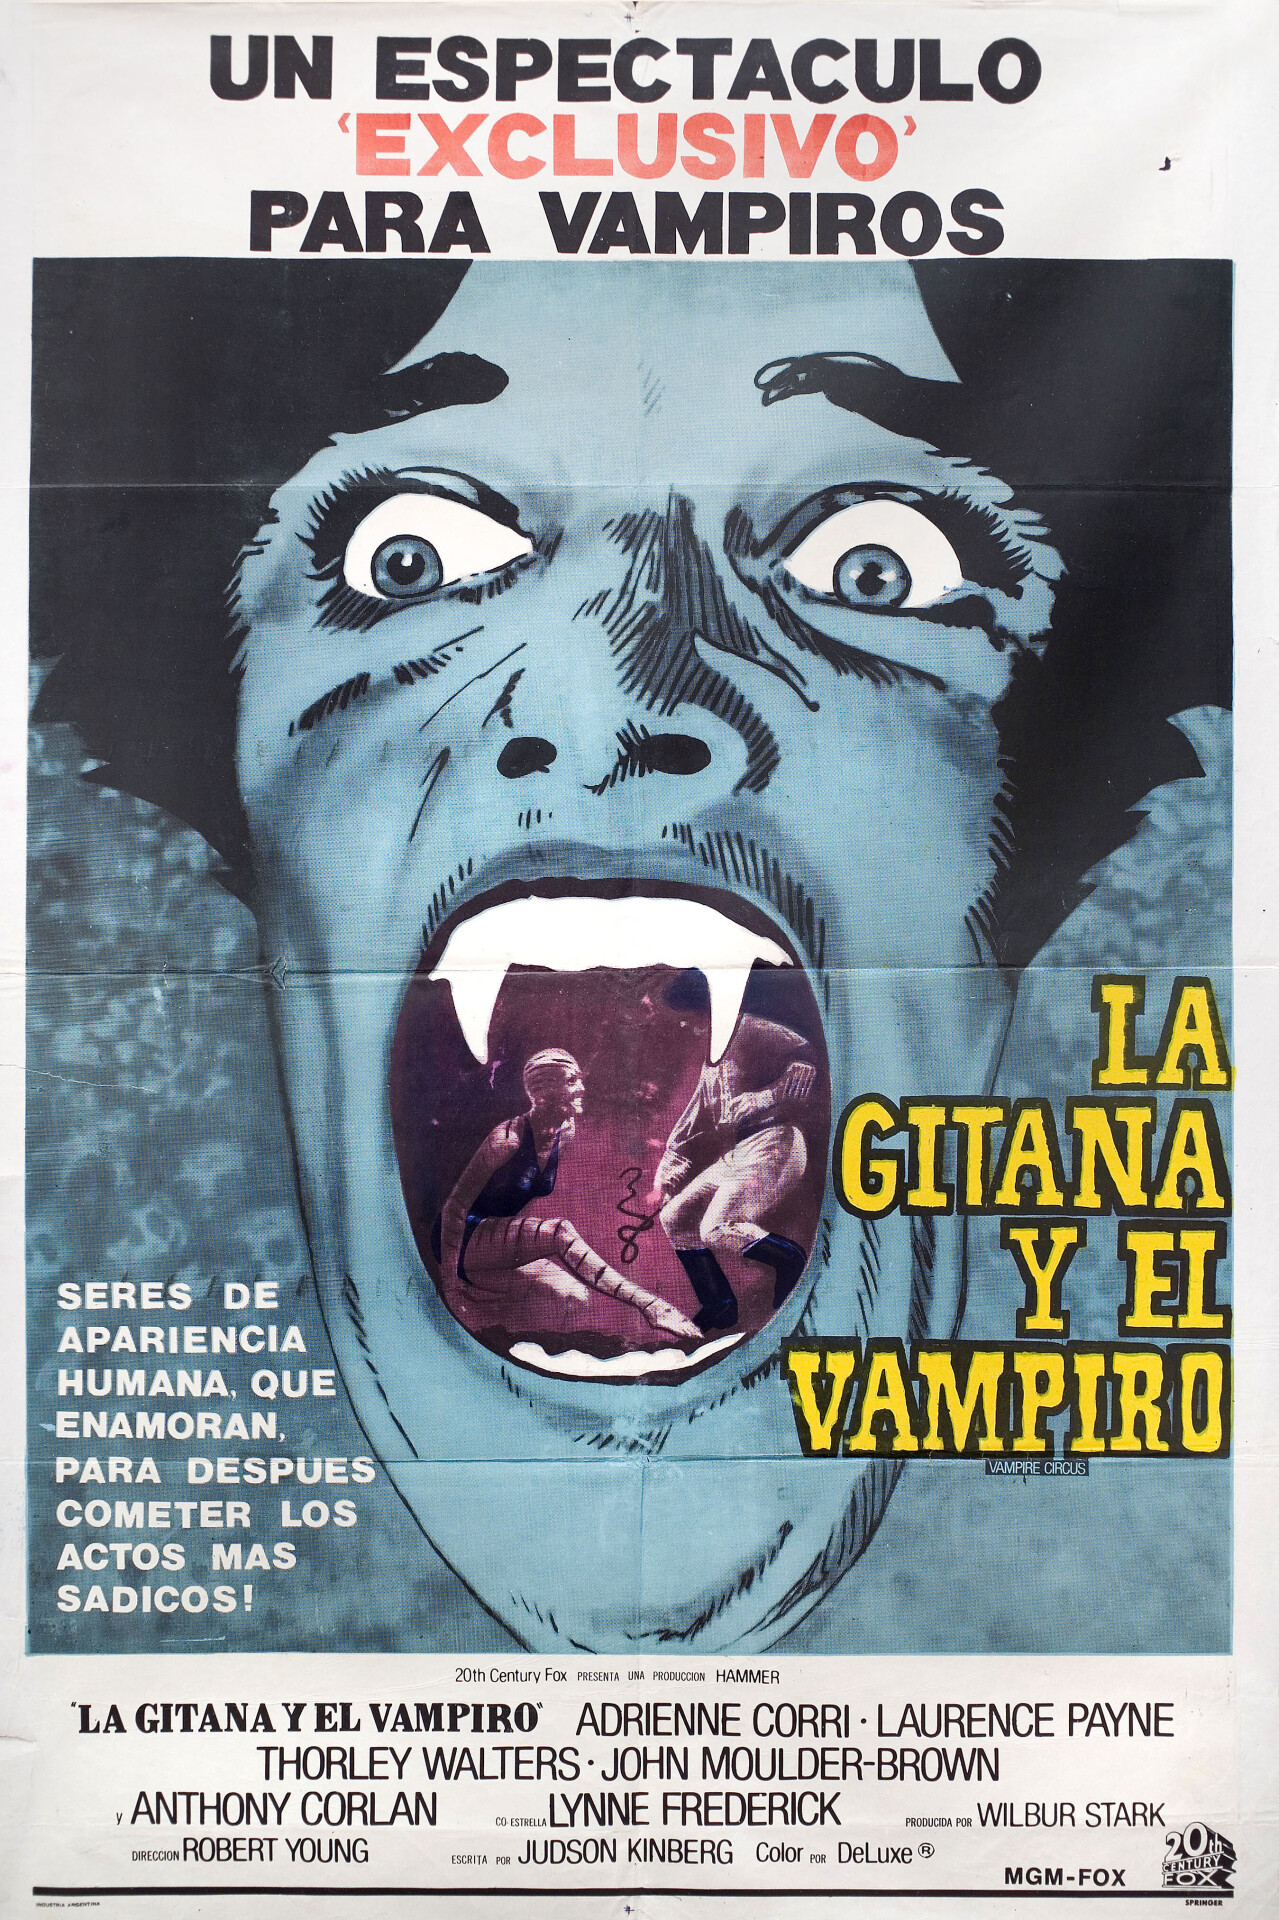 Цирк вампиров  (Vampire Circus, 1972), режиссёр Роберт Янг, аргентинский постер к фильму (Hummer horror, 1972 год)